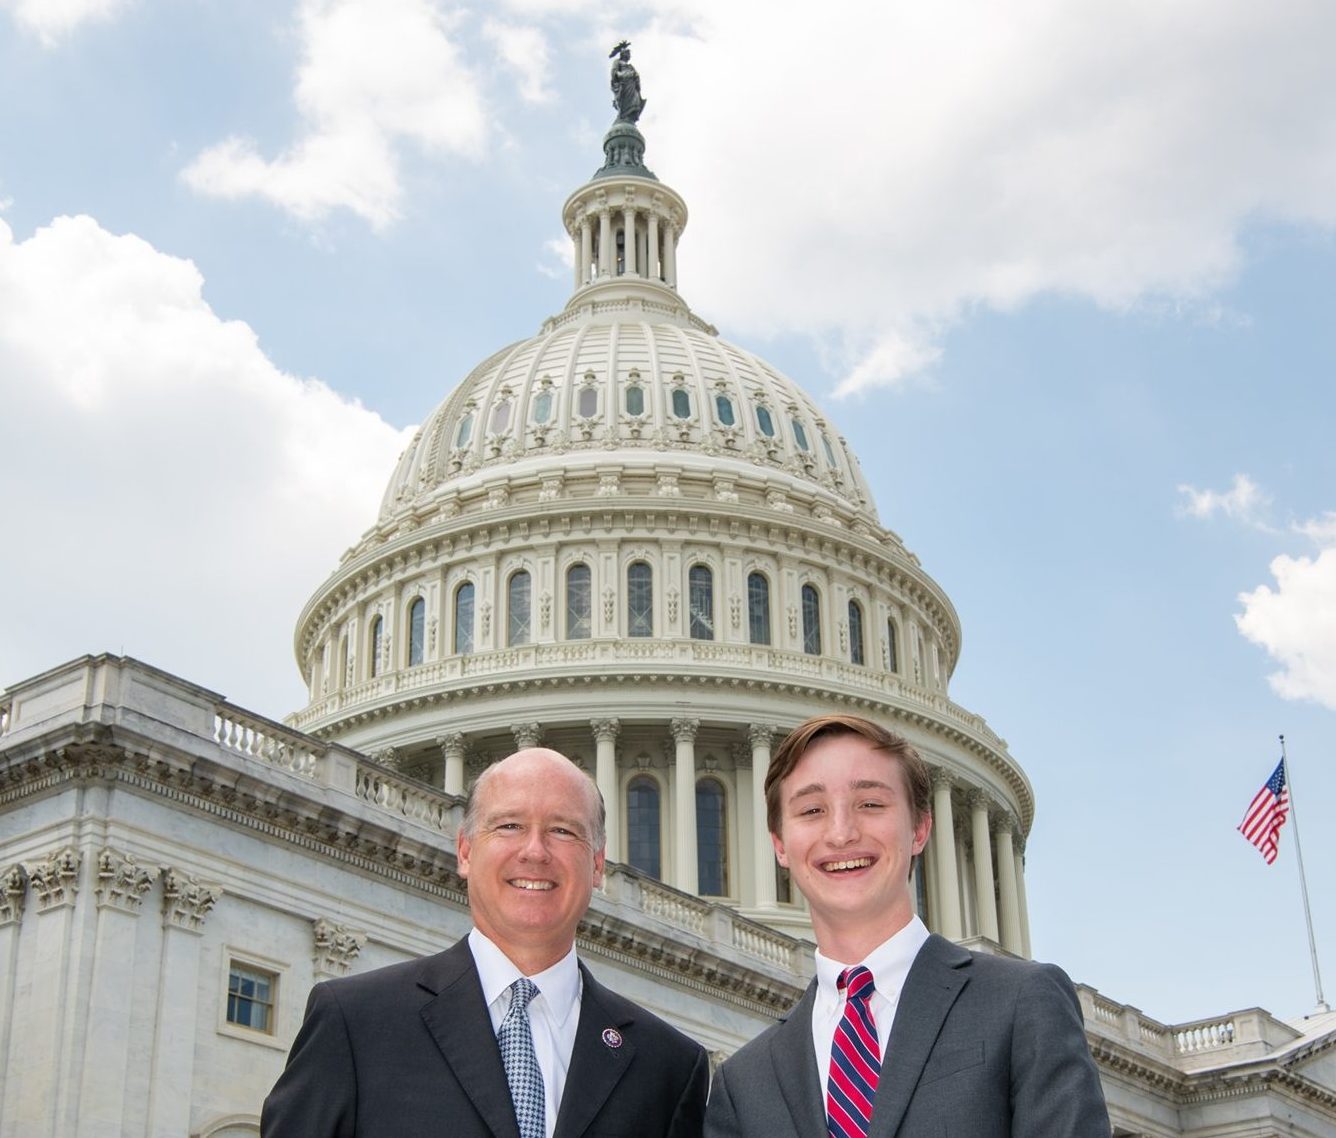 Congressman Robert Aderholt and Blackburn student Walt Shelton